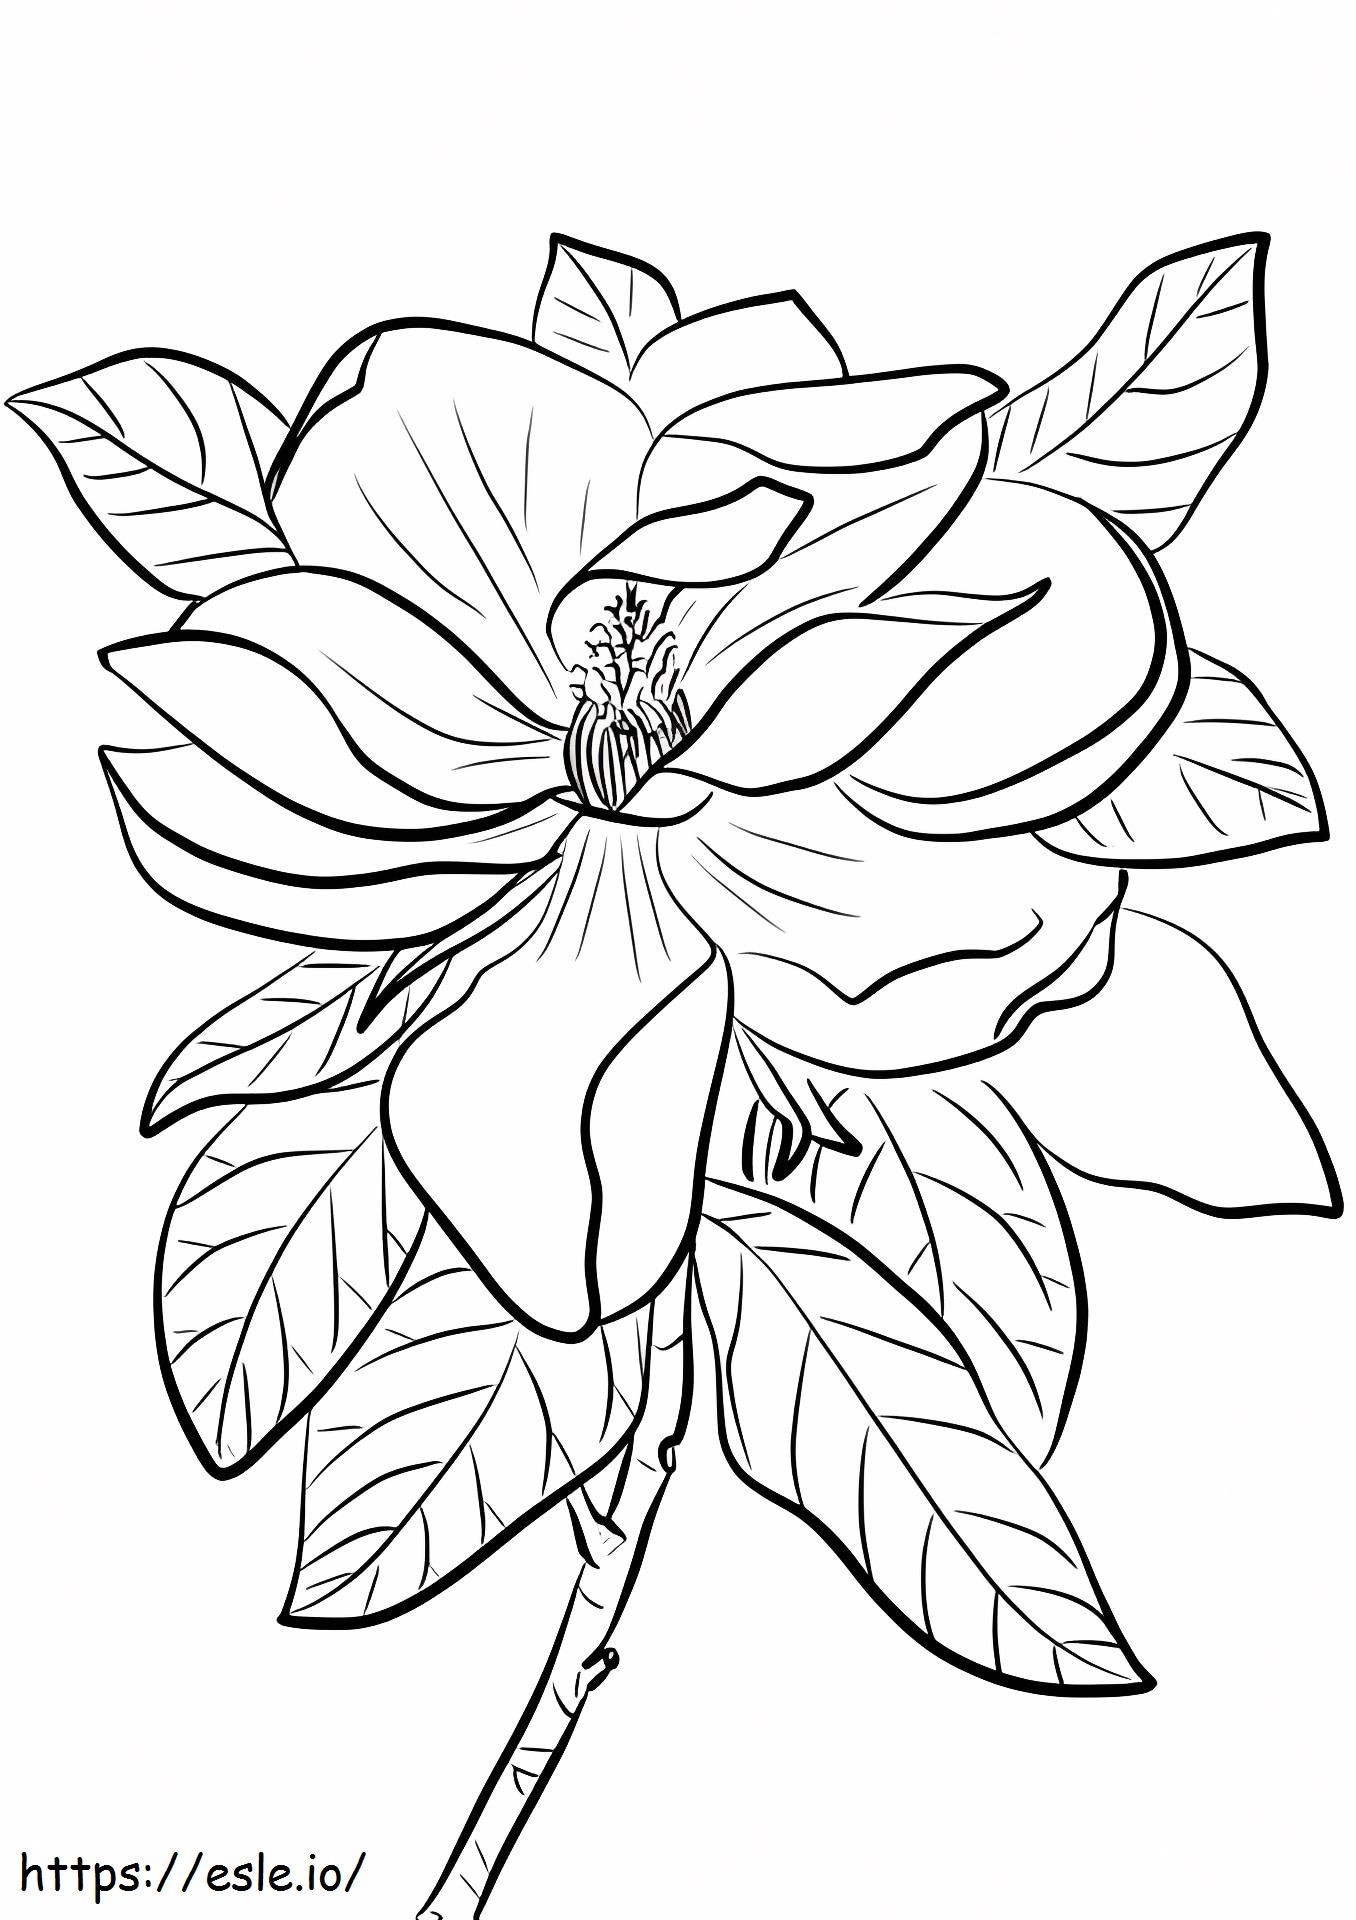 1527069114_Magnolia Grandiflora de colorat